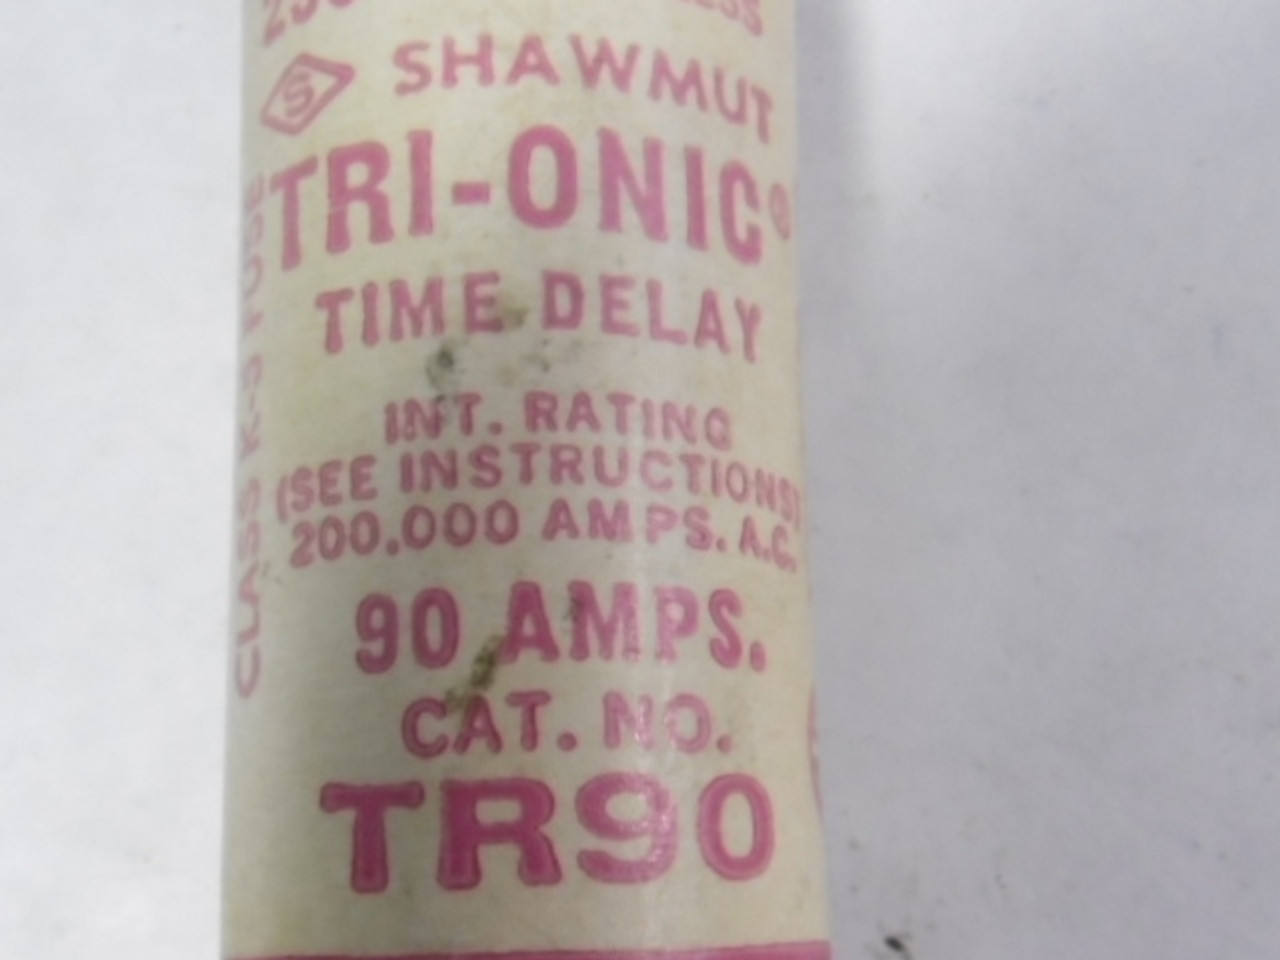 Shawmut TR90 Time Delay Tri-onic Fuse 90A 250V USED